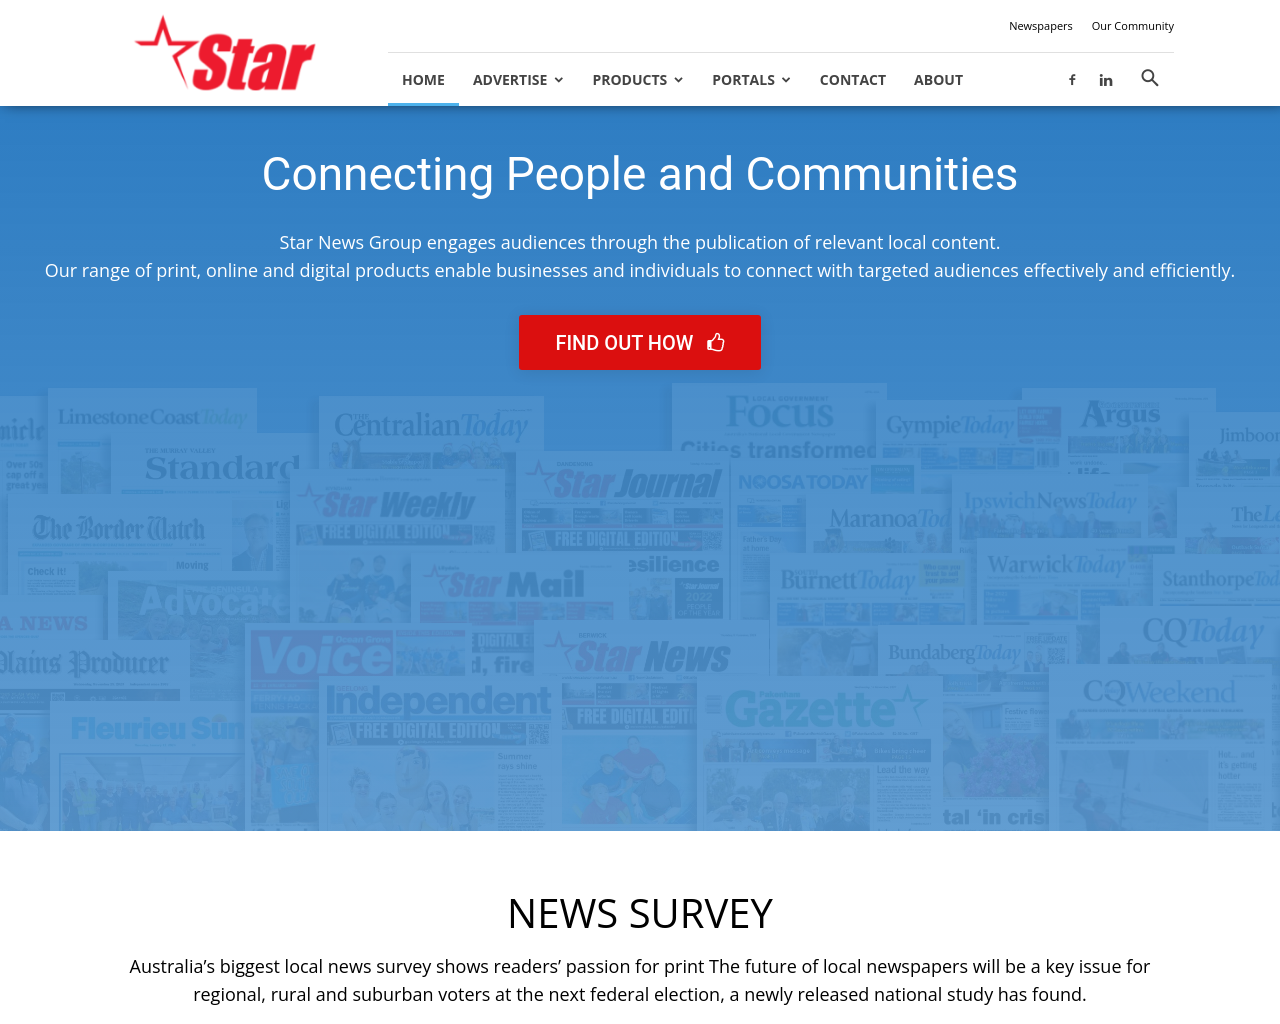 starnewsgroup.com.au